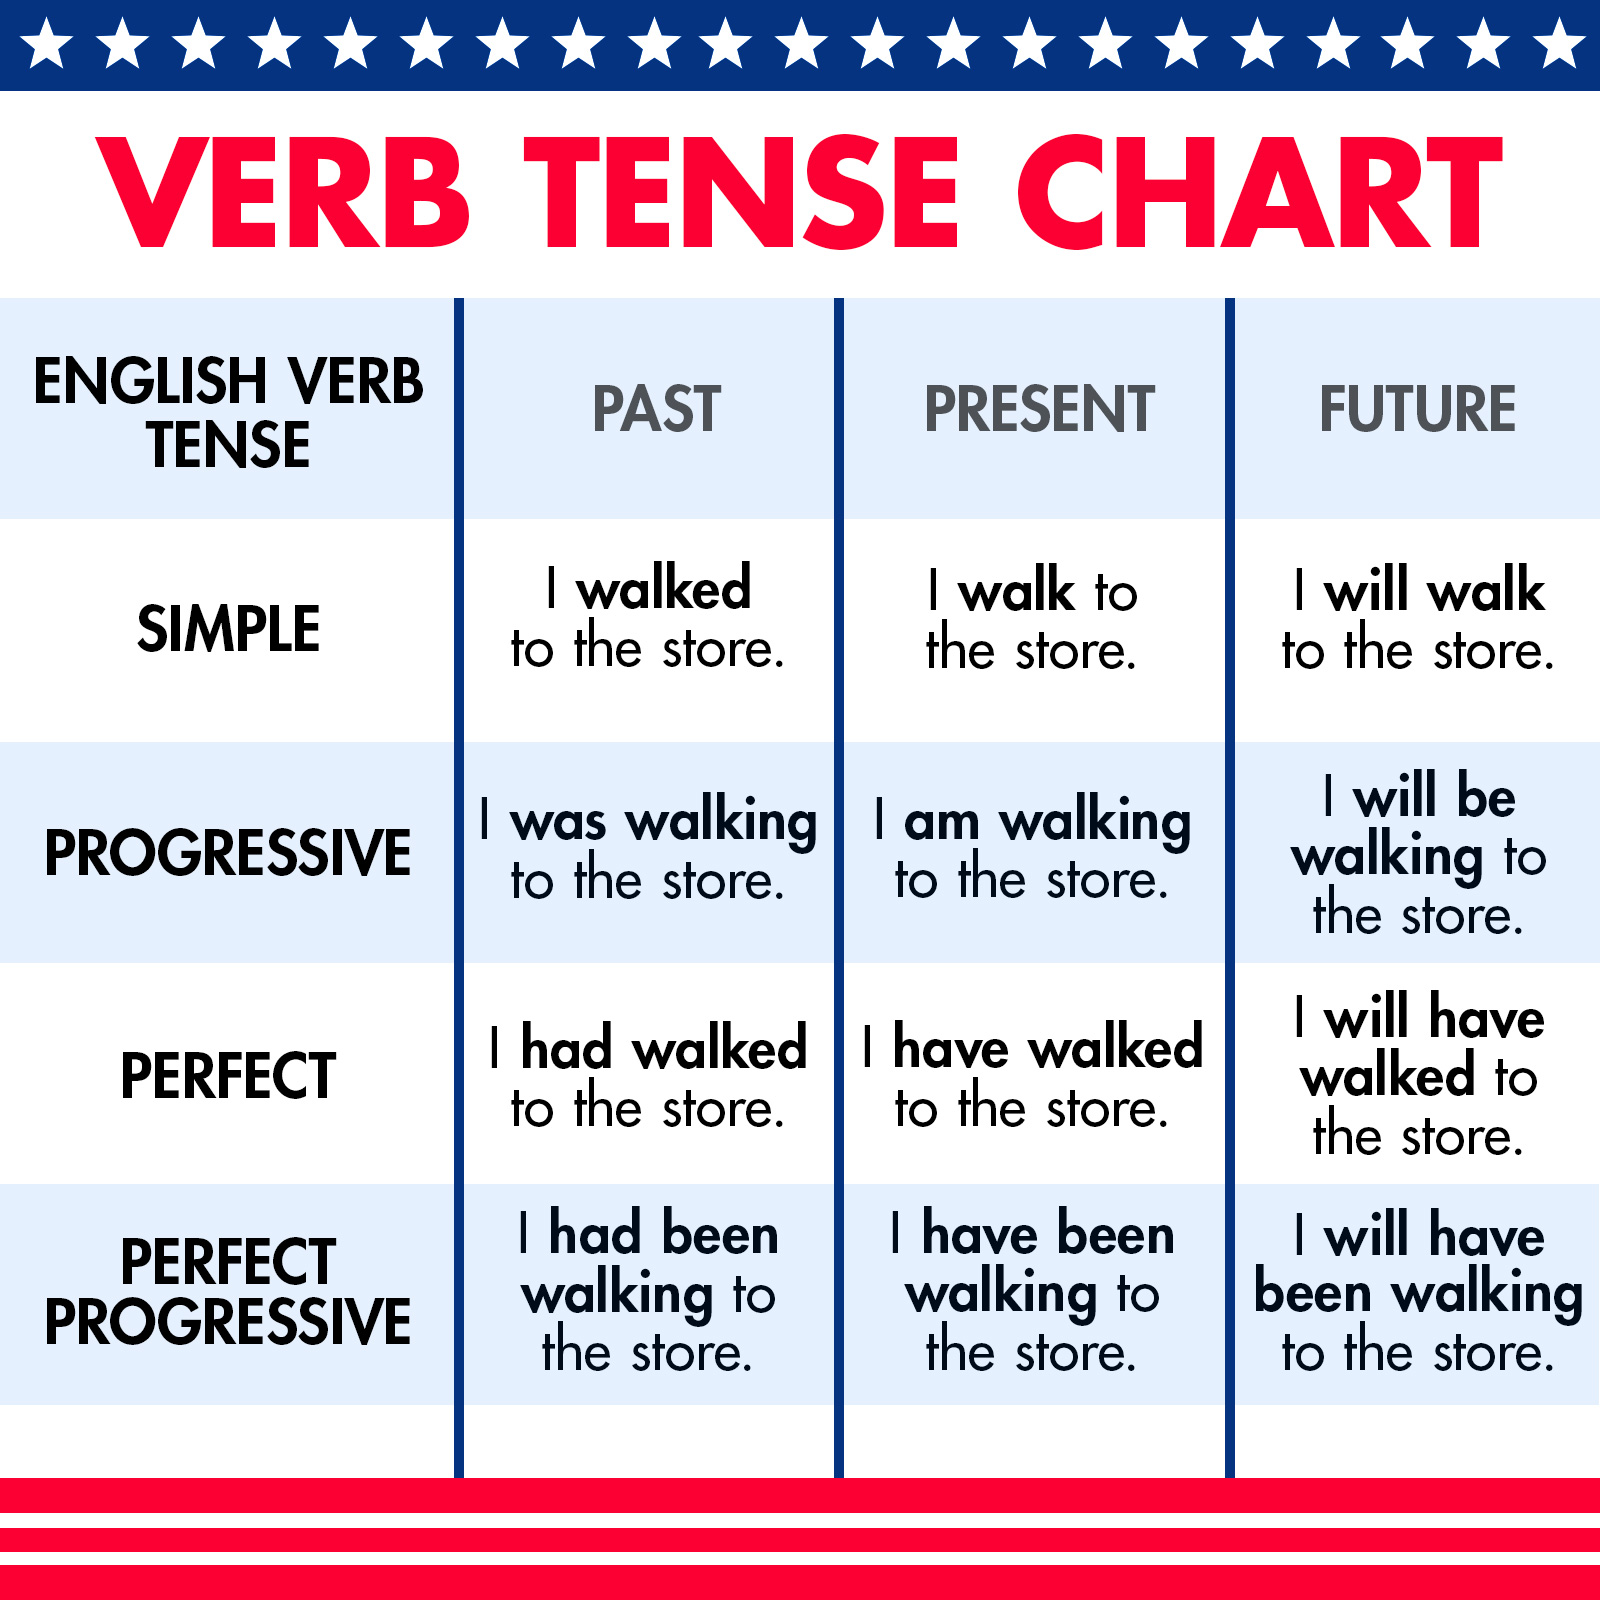 types-of-present-tense-verbs-uno